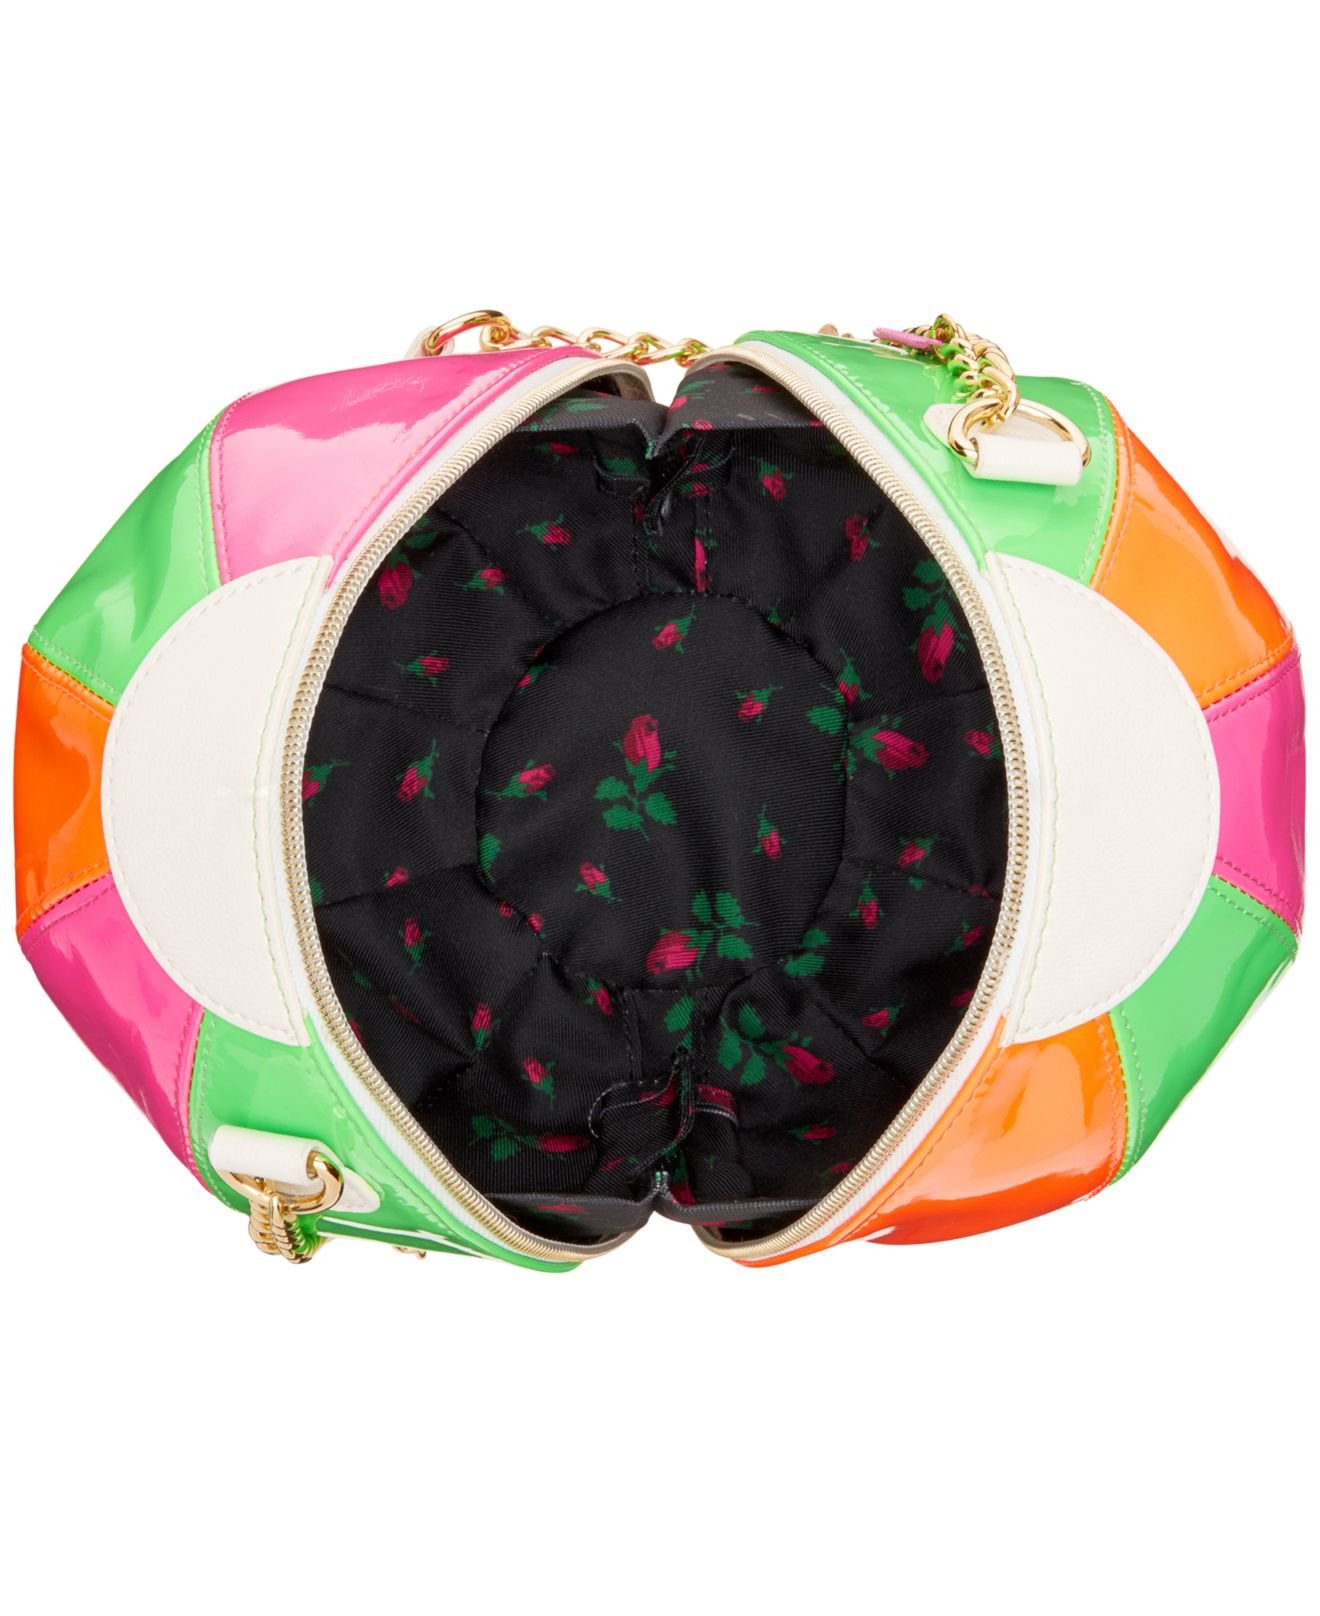 Betsey Johnson Macy's Exclusive Beach Ball Shoulder Bag | Lyst